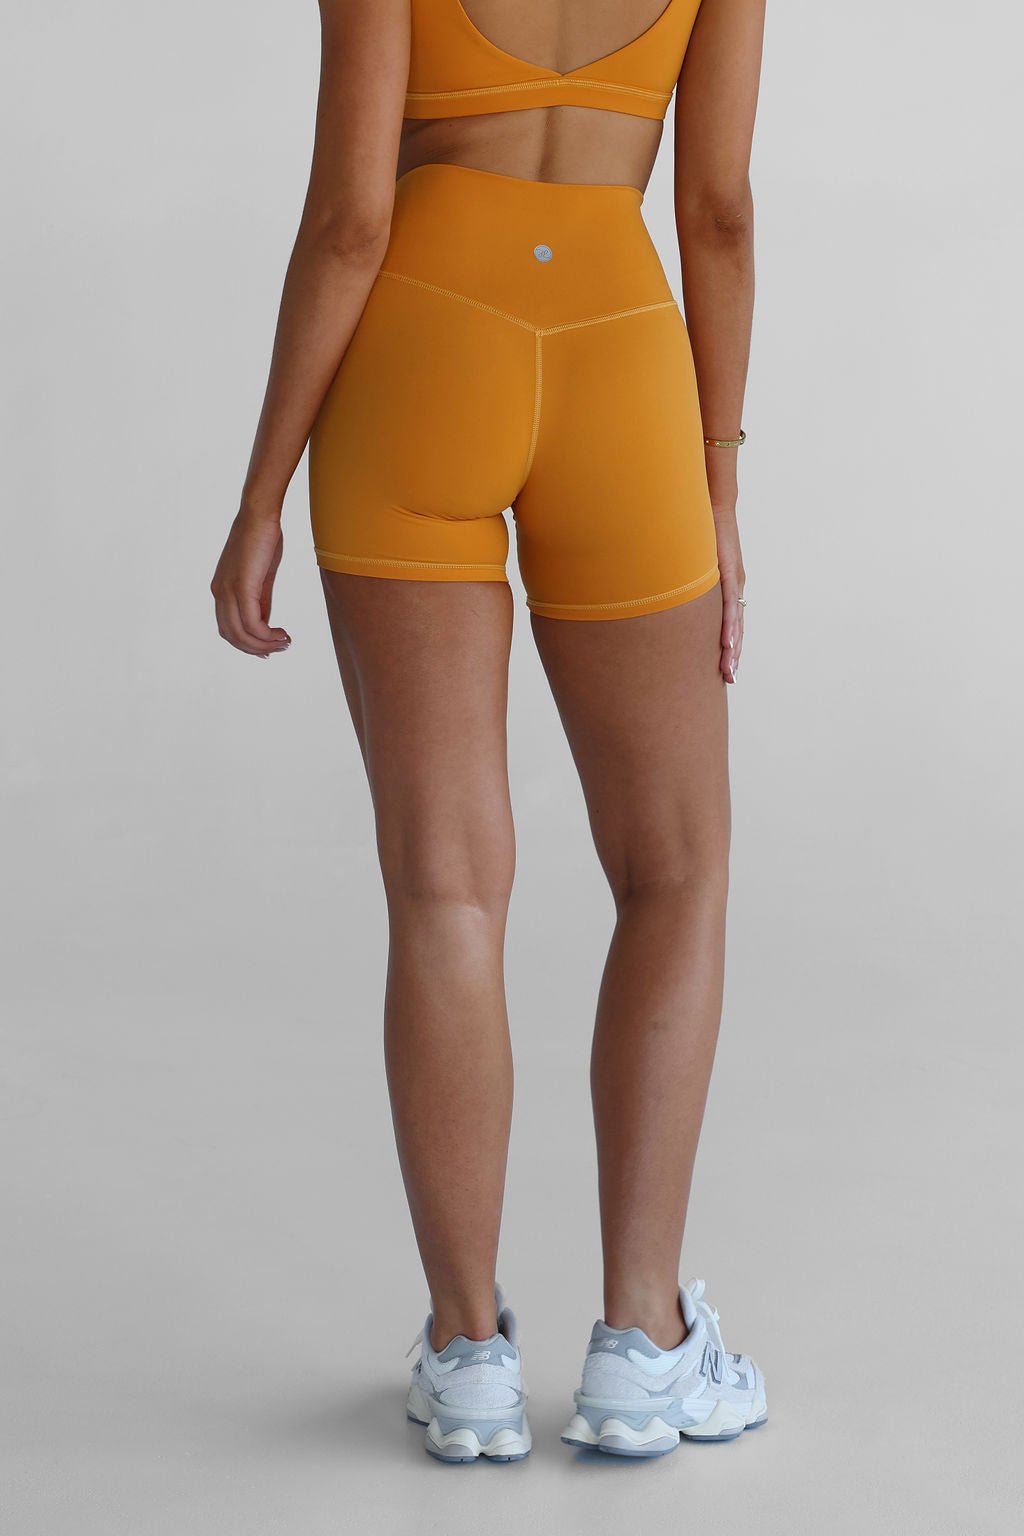 SCULPT Bike Shorts - Tangerine - LEELO ACTIVE